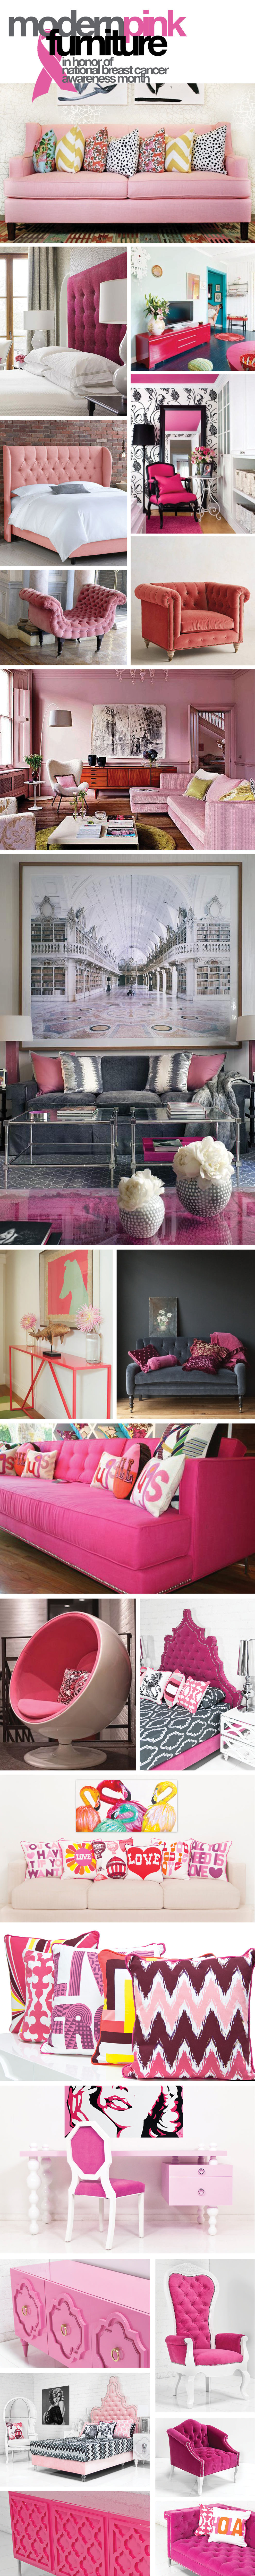 modern pink furniture, breast cancer awareness month